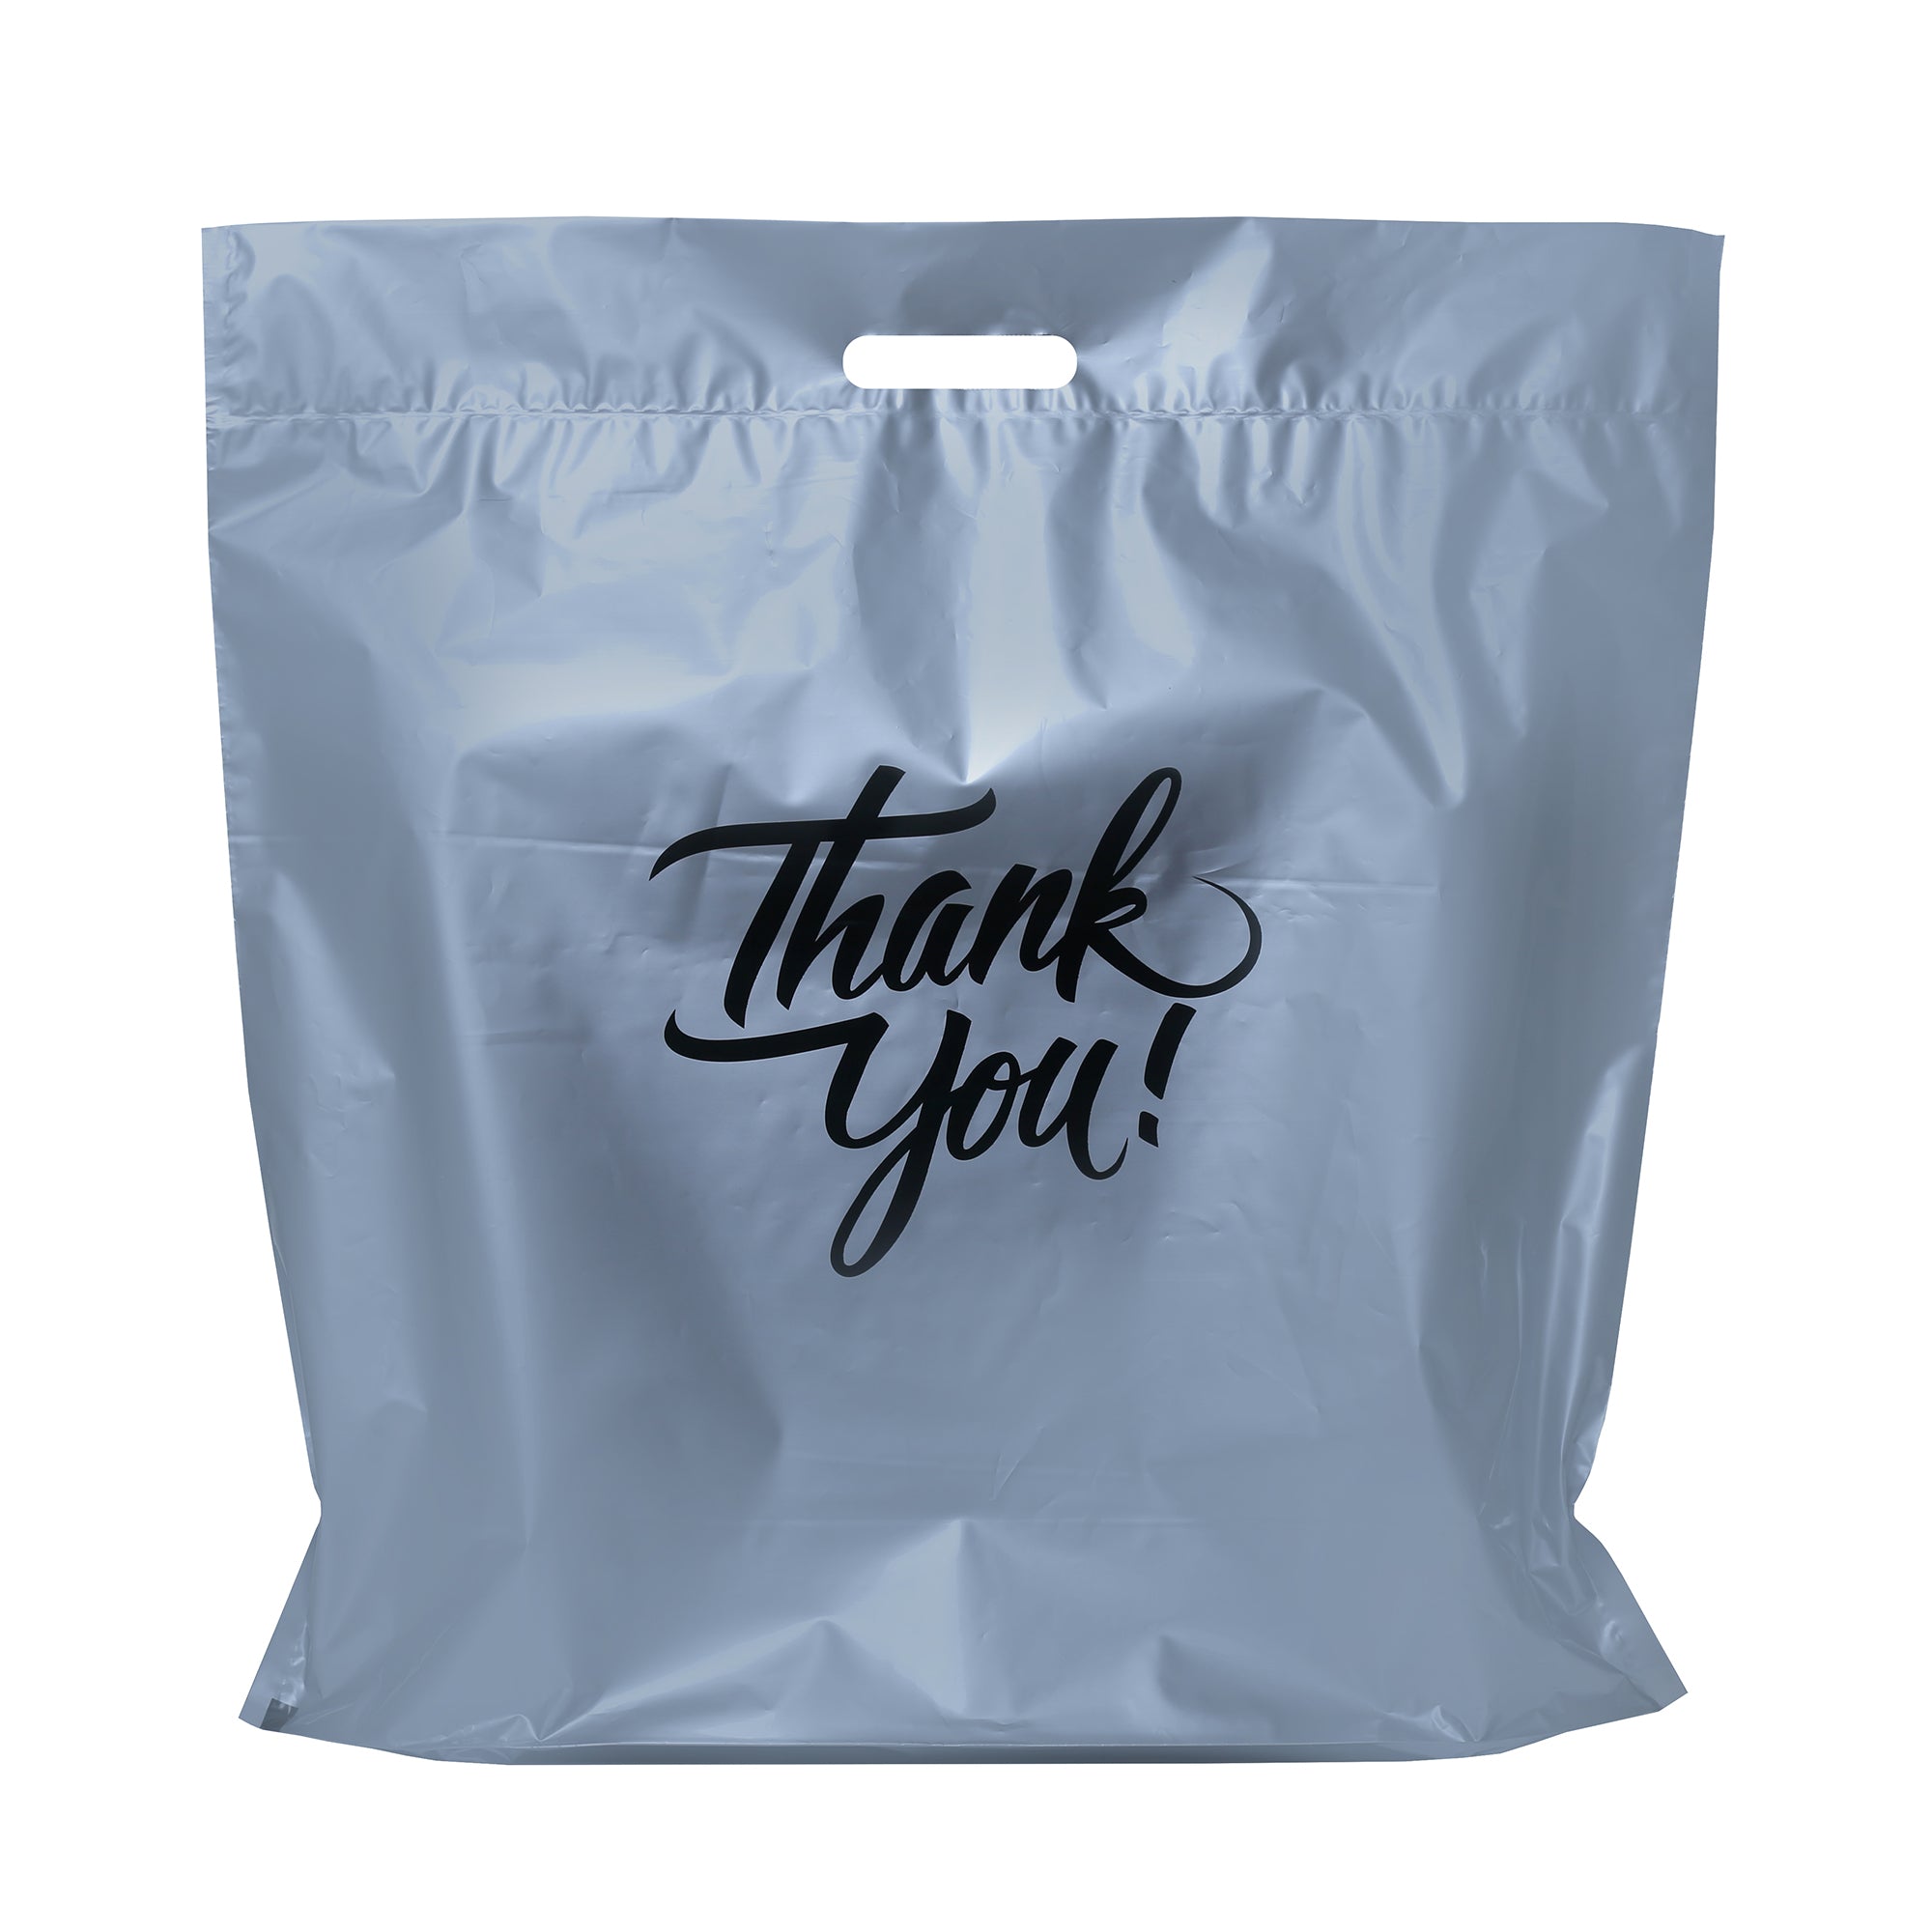 20x20 Plastic Bags - 100 Pack of Thank You Printed Merchandise Bags 2 Mil | Infinitepack Silver